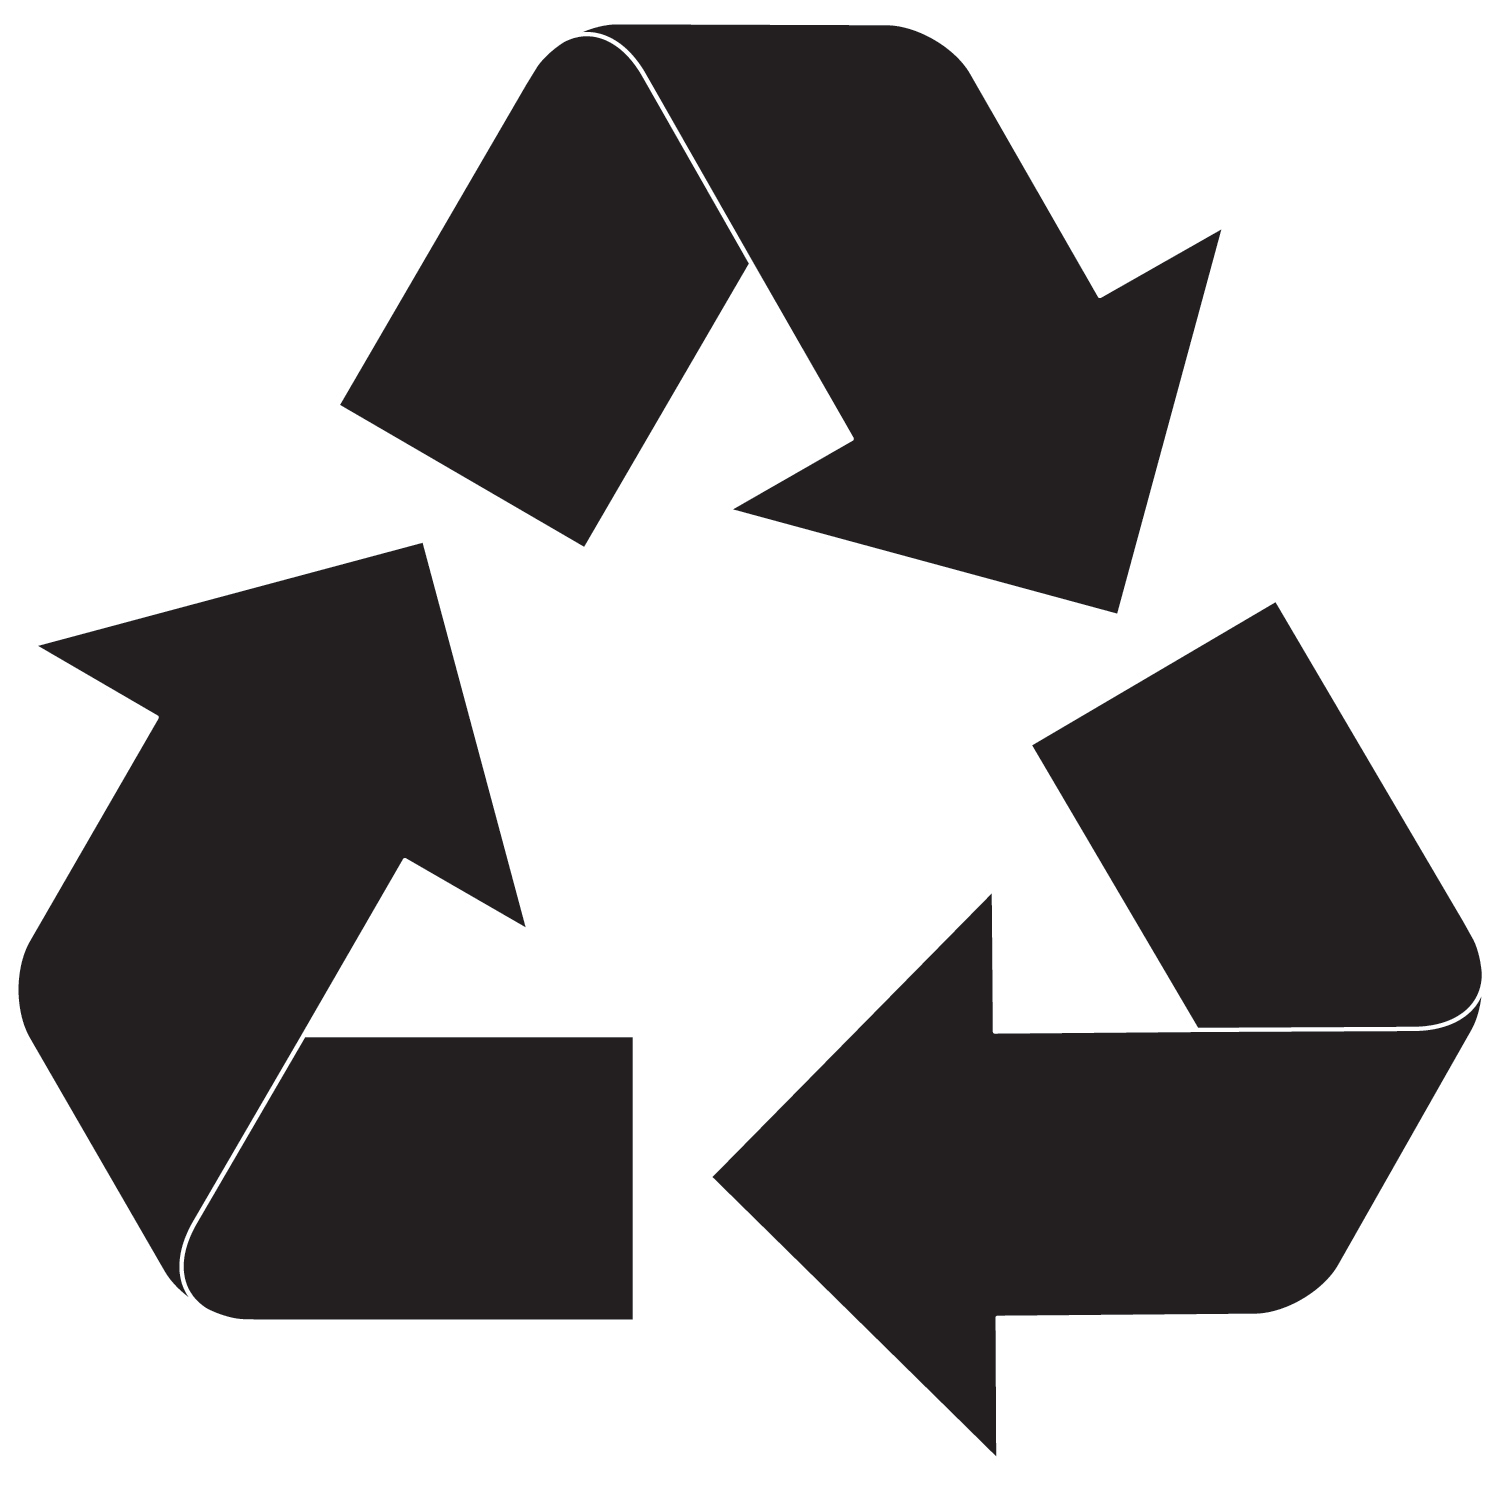 Recycle Symbol Clip Art